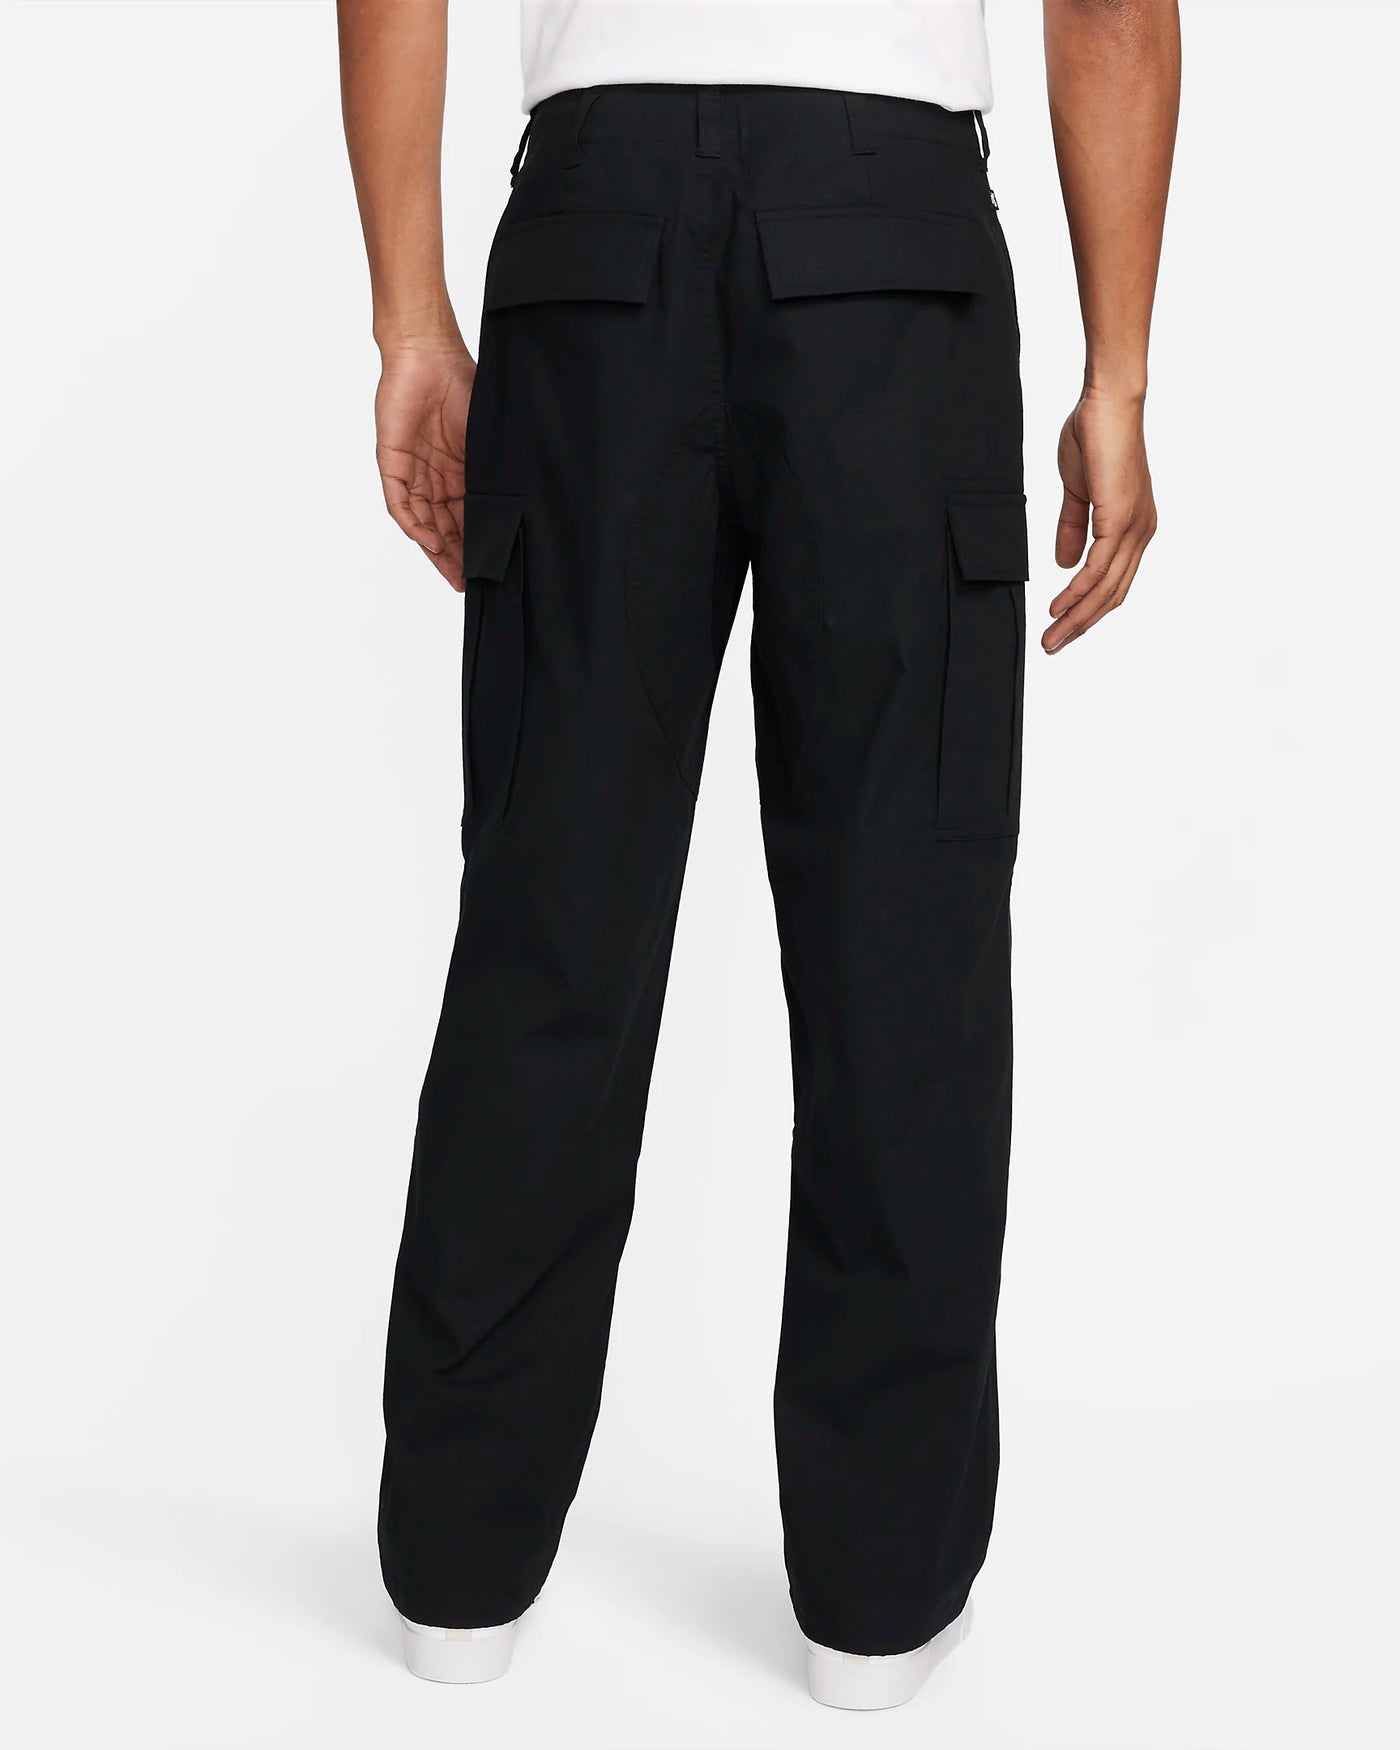 Nike SB 0495 Kearny Cargo Pant - Black